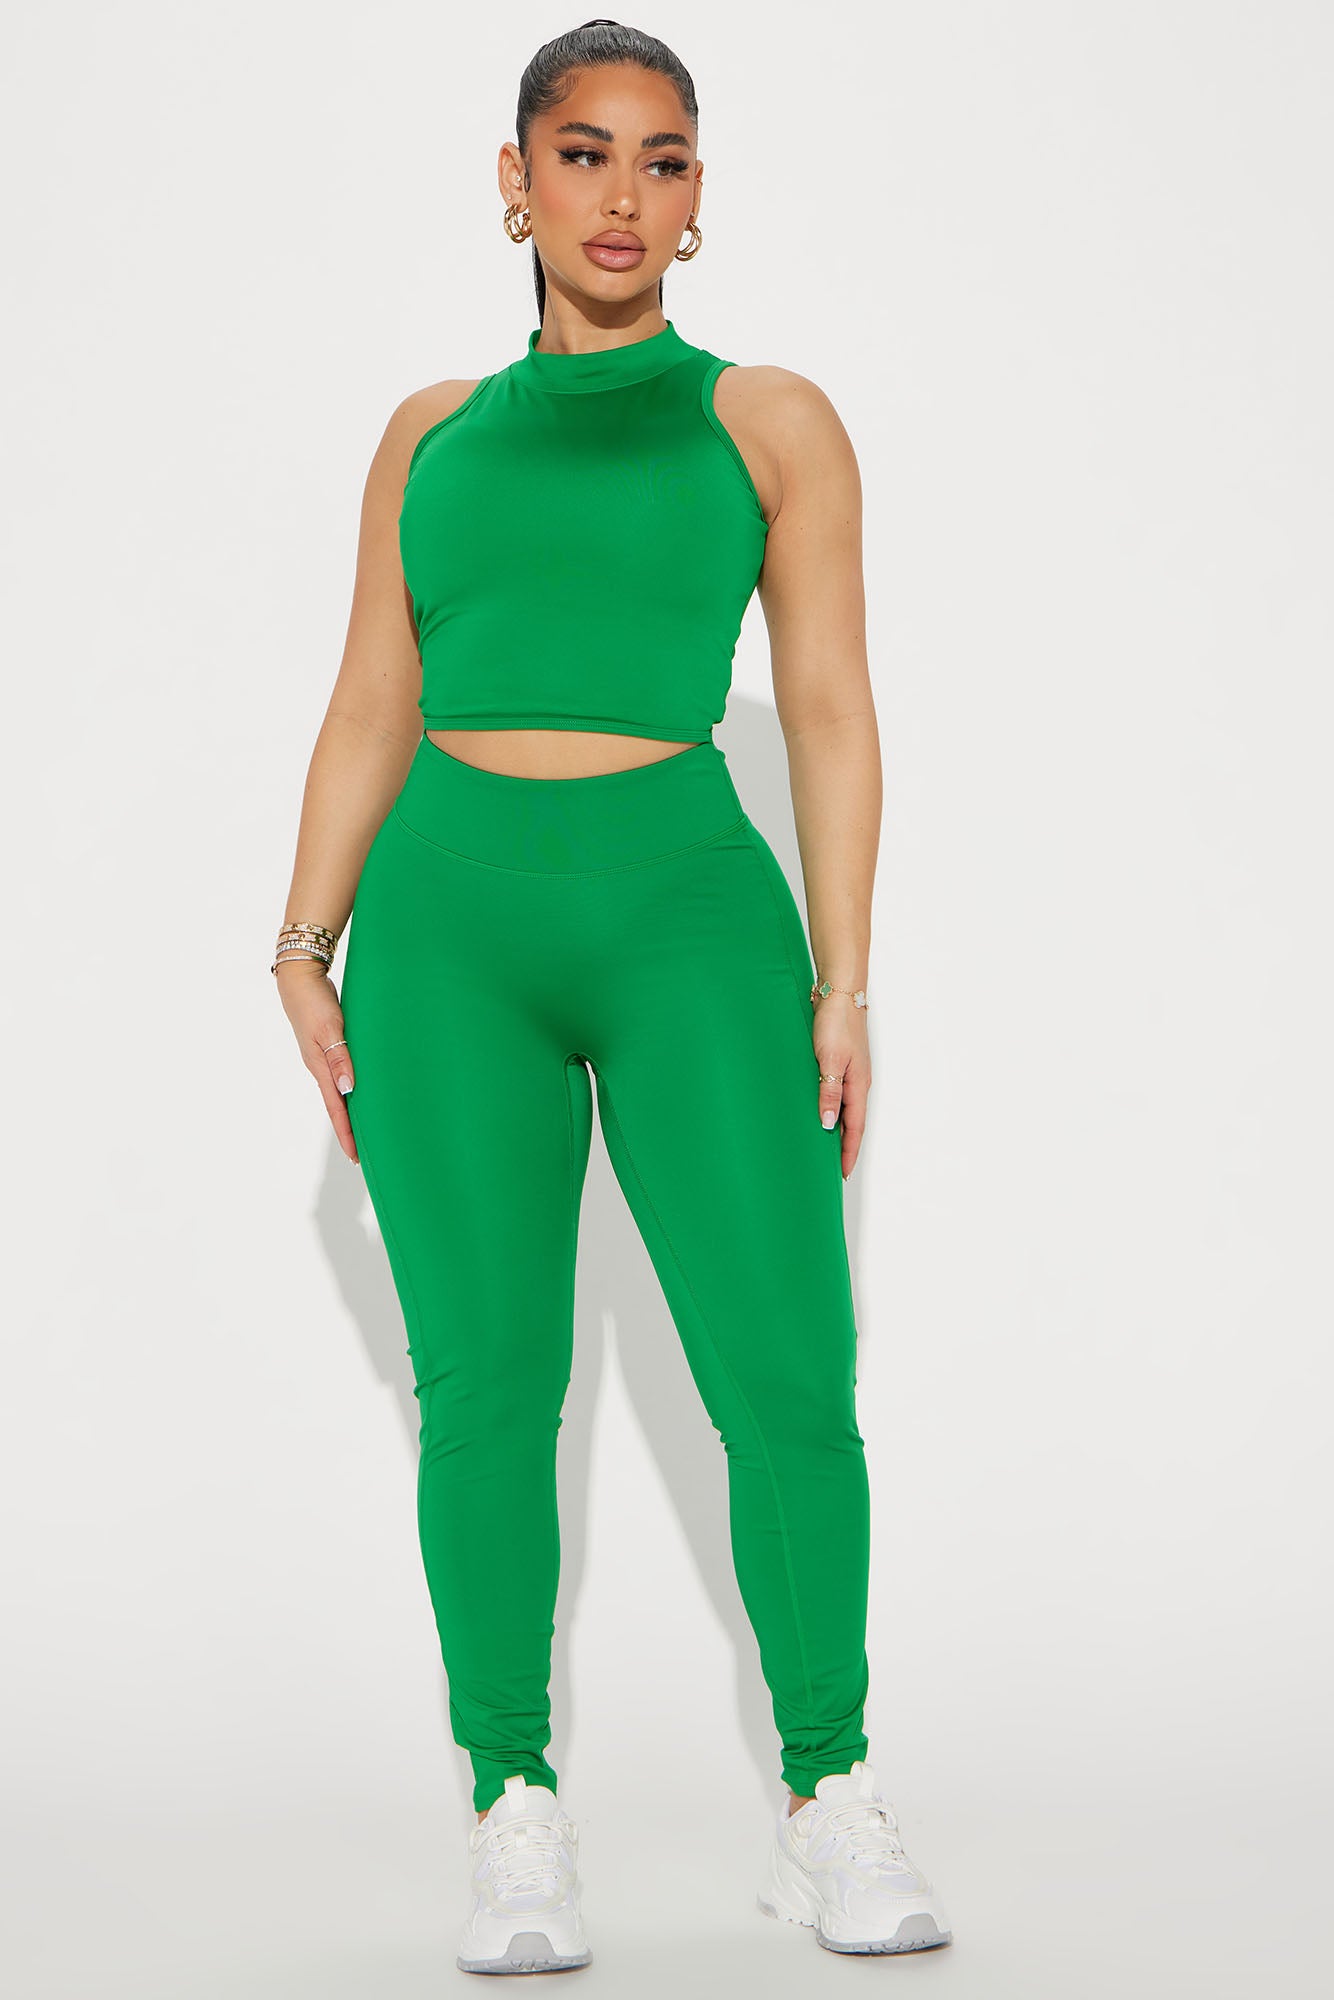 SIA Green Leggings - TIYE the coolest sportswear & gym apparel